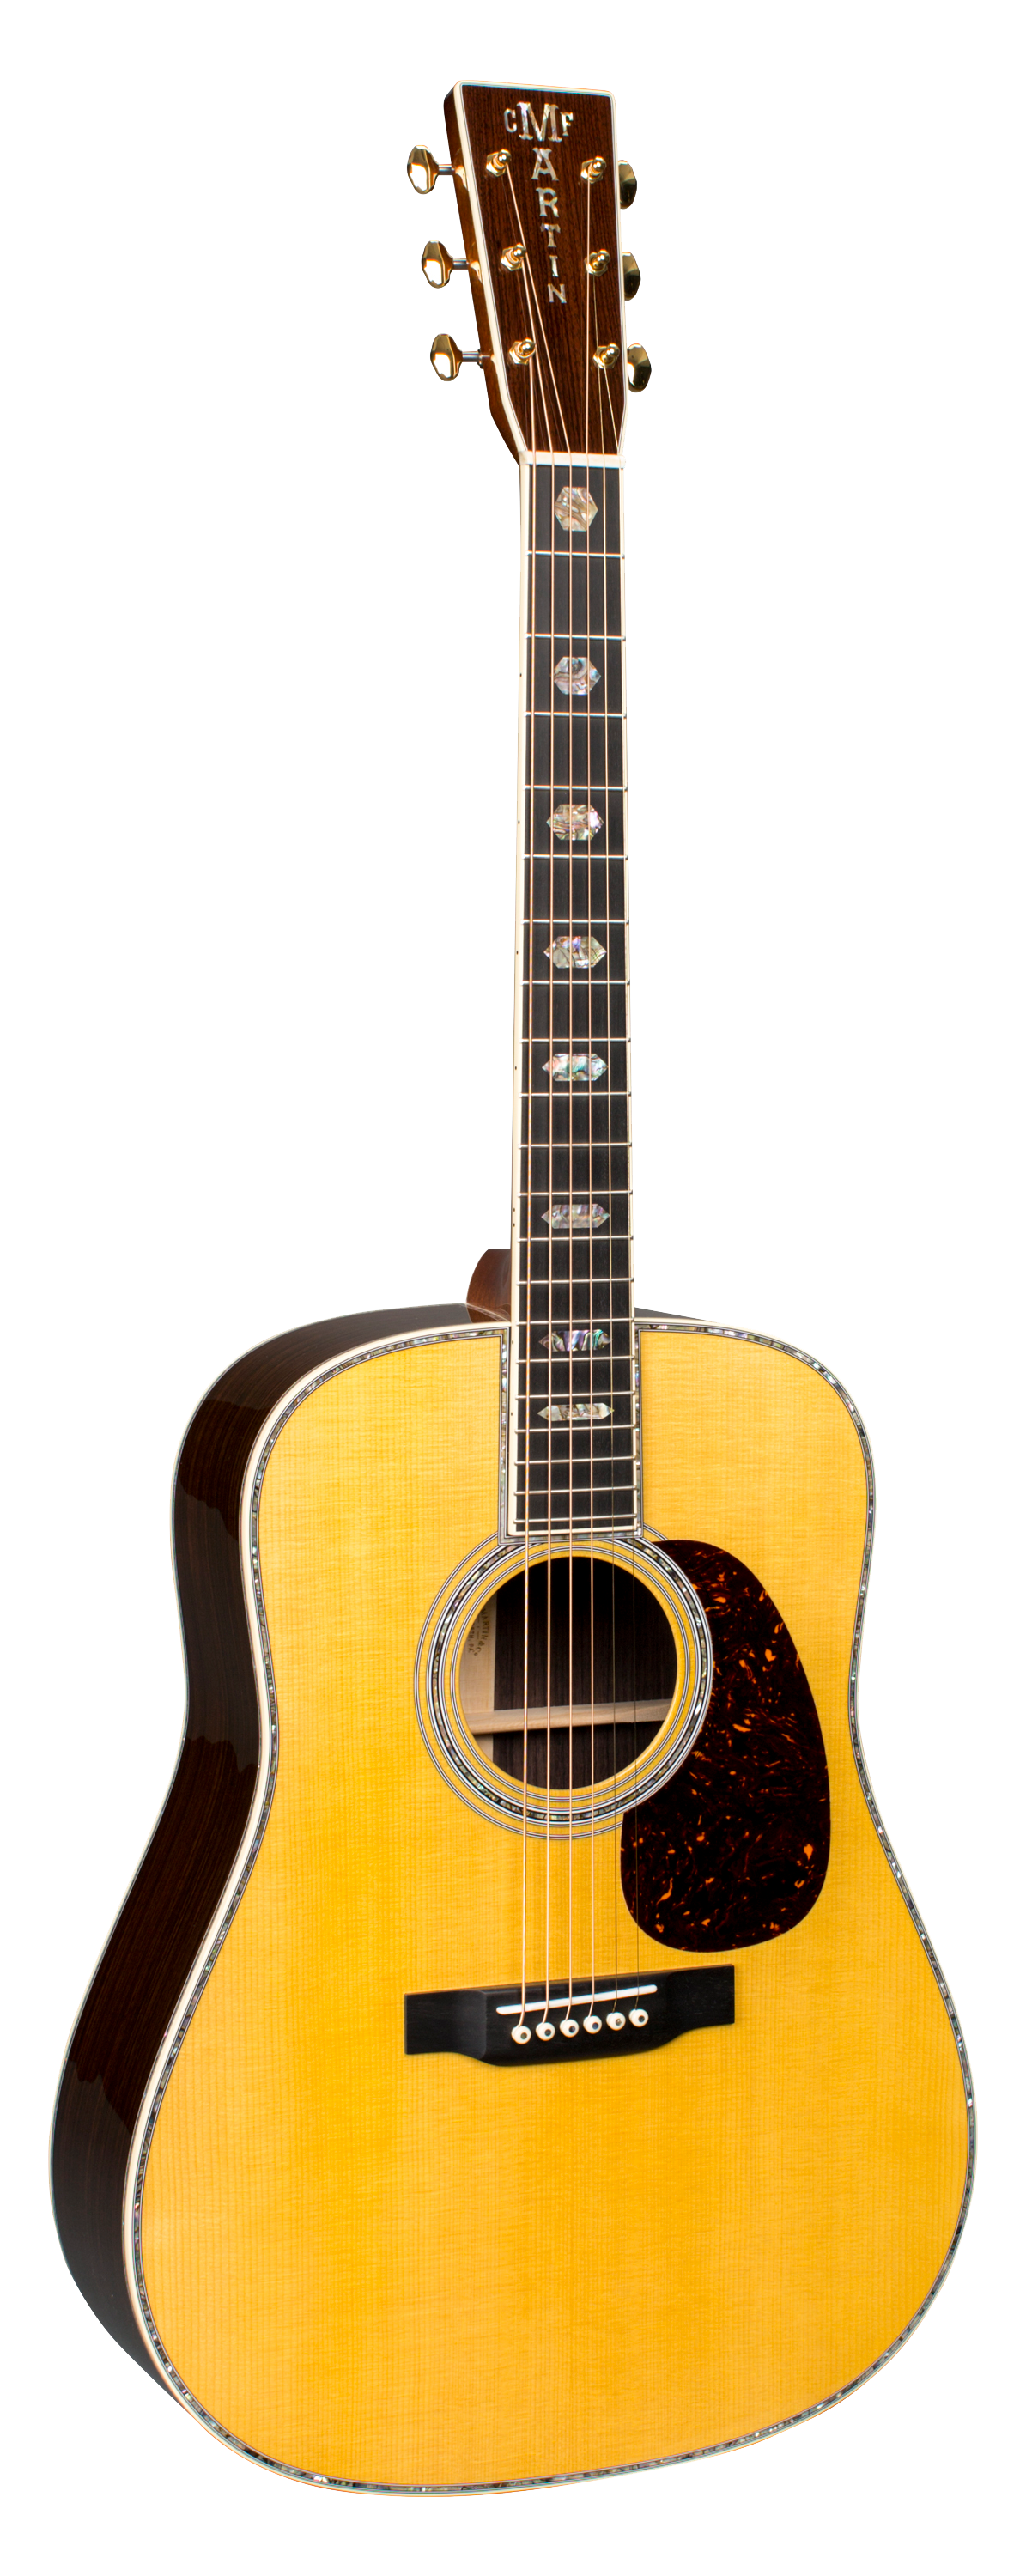 Martin D-45 Acoustic Guitar with hand inlaid pearl Tone Shop Guitars Dallas TX